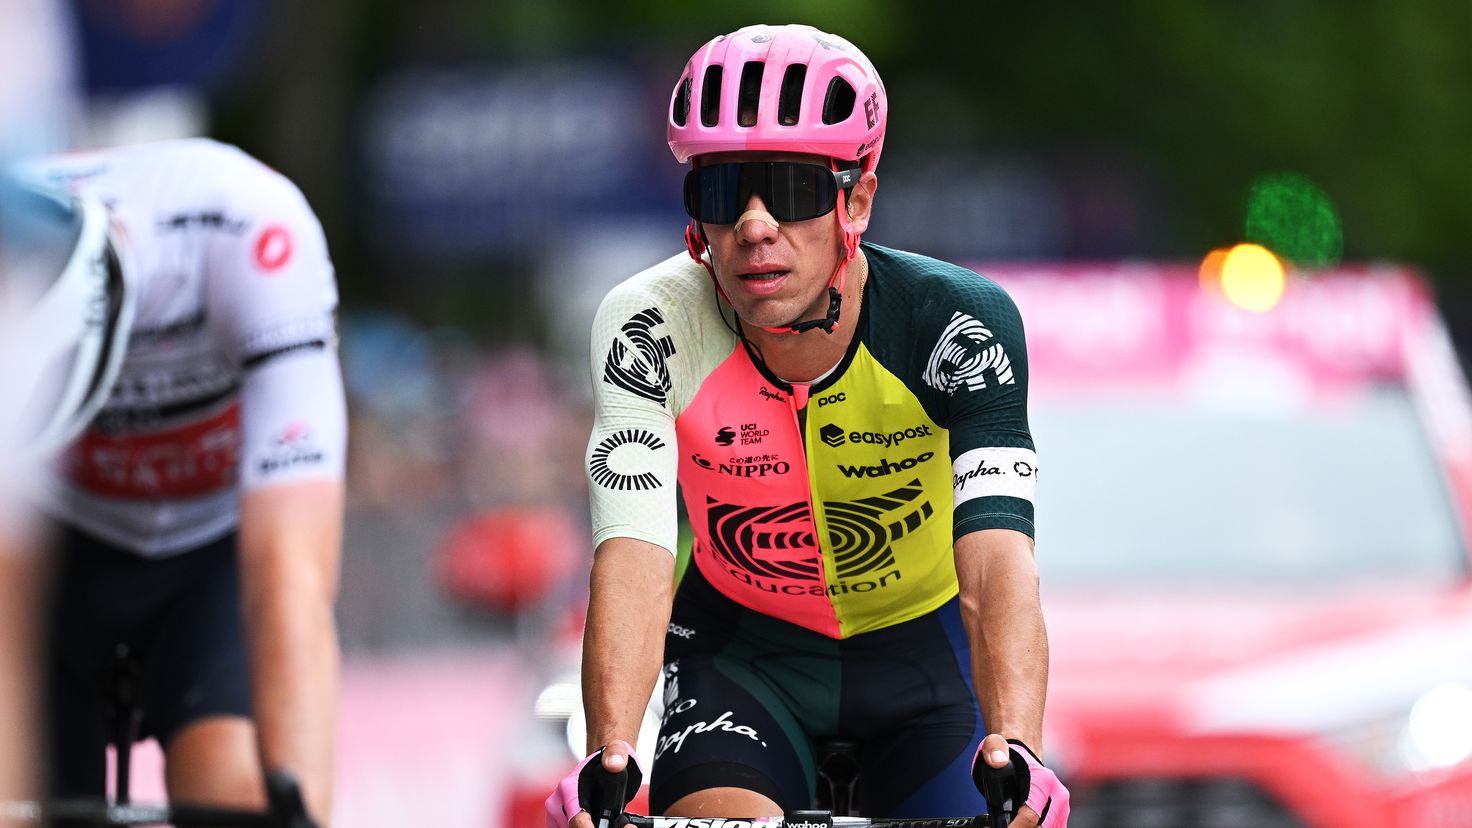 Rigoberto Urán abandons the Giro d'Italia due to covid-19
